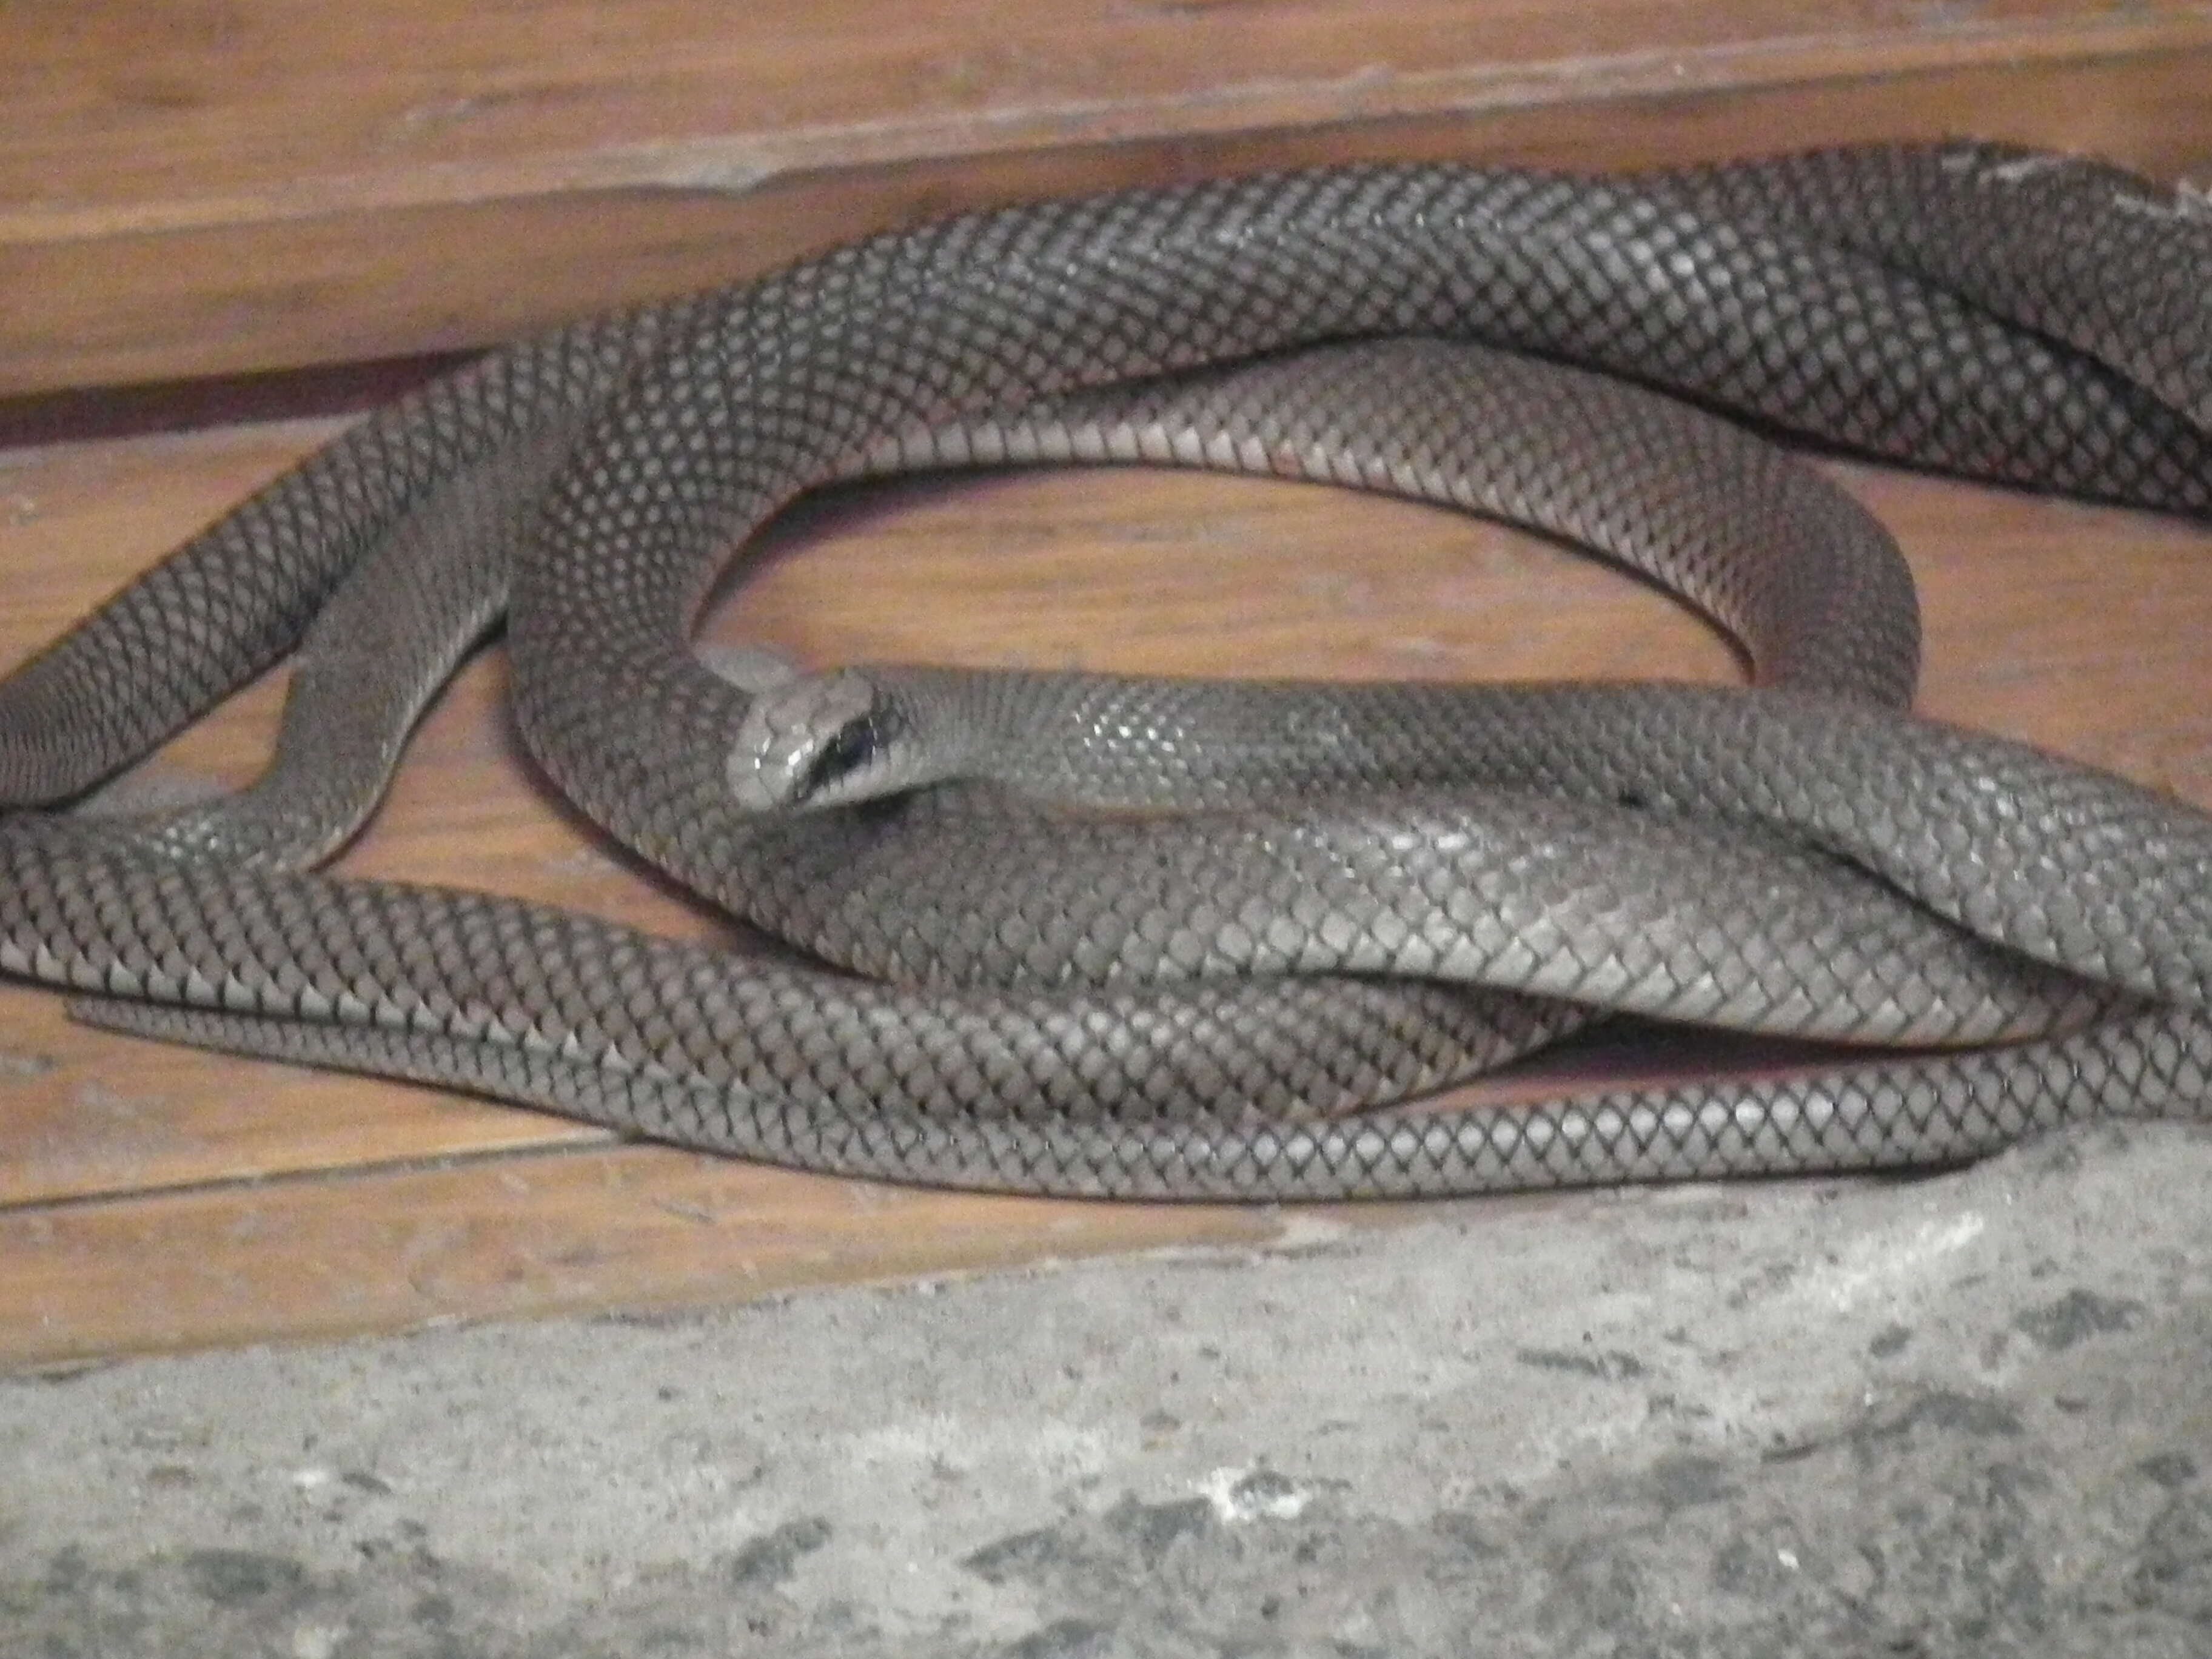 Red Beaked Snake - Encyclopedia of Life